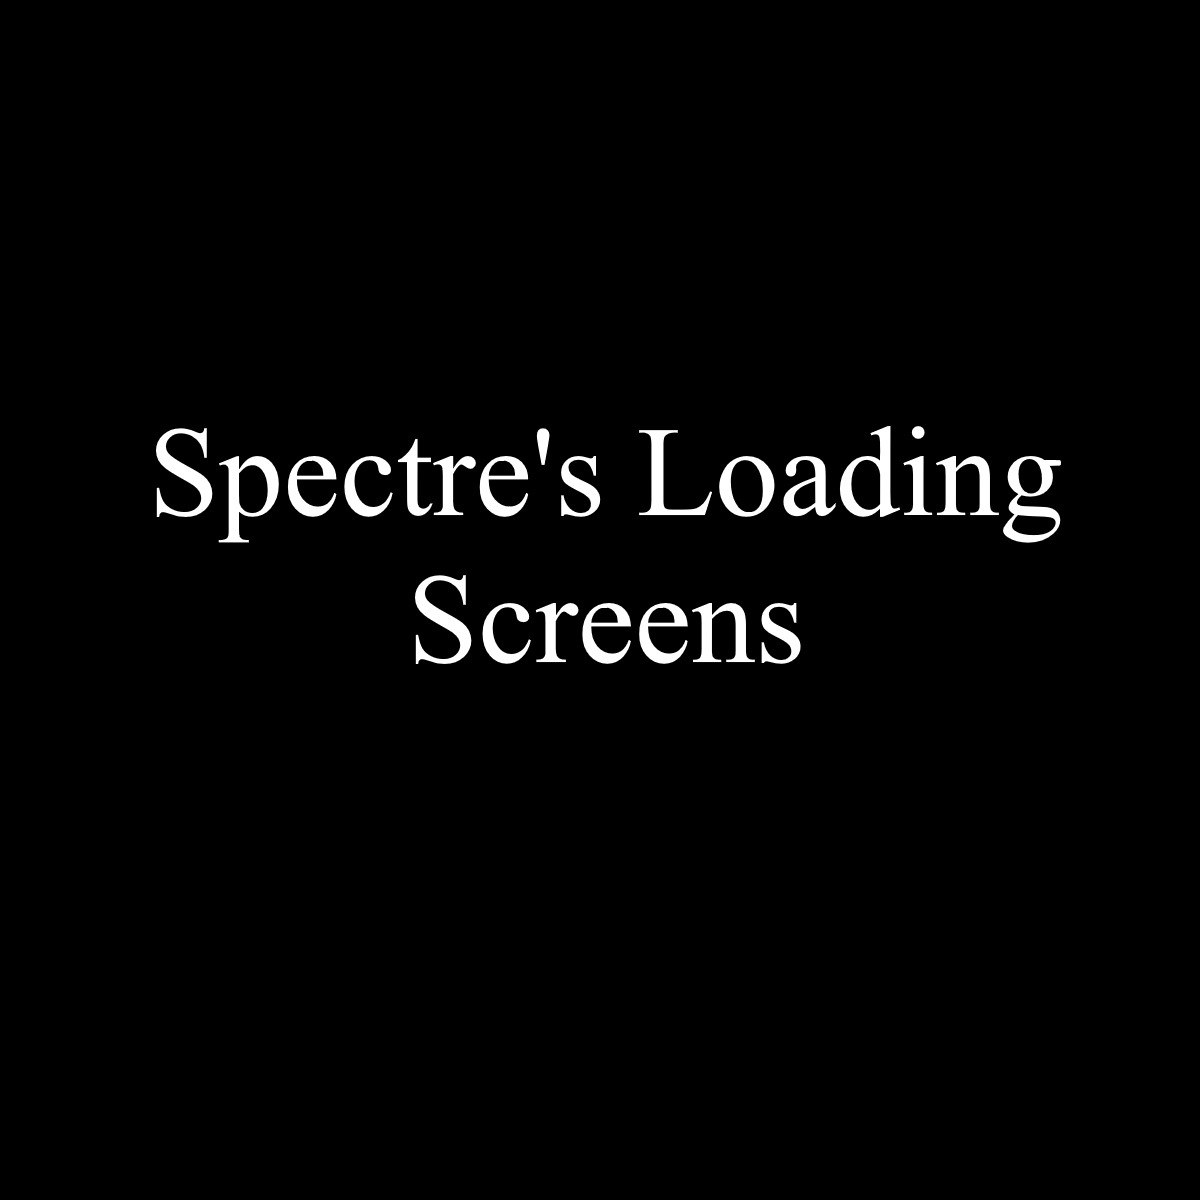 Spectre's Loading Screens